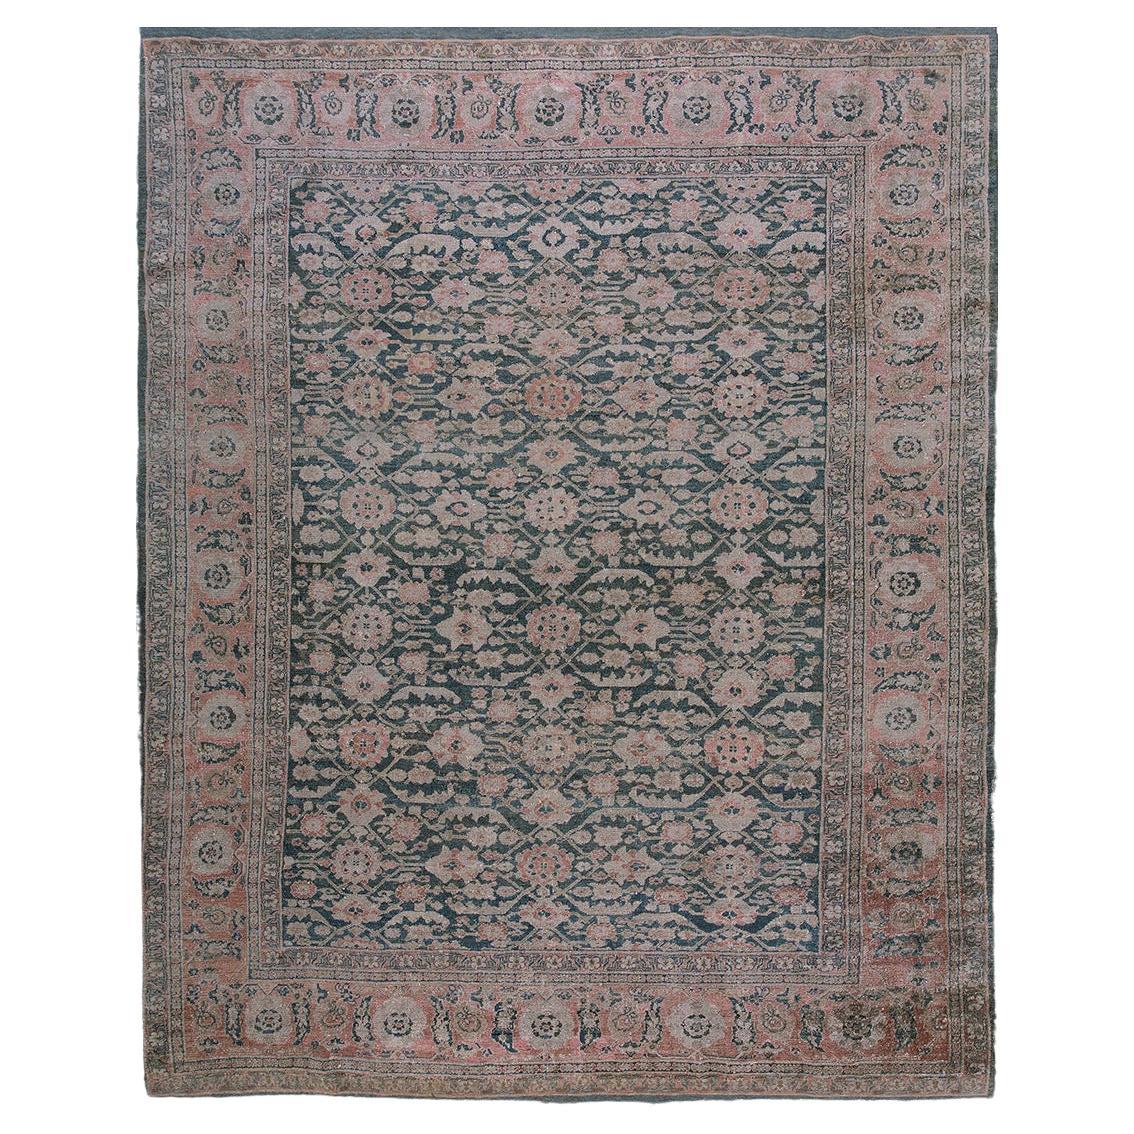 Early 20th Century Persian Malayer Carpet 8' 10" x 11' 3"